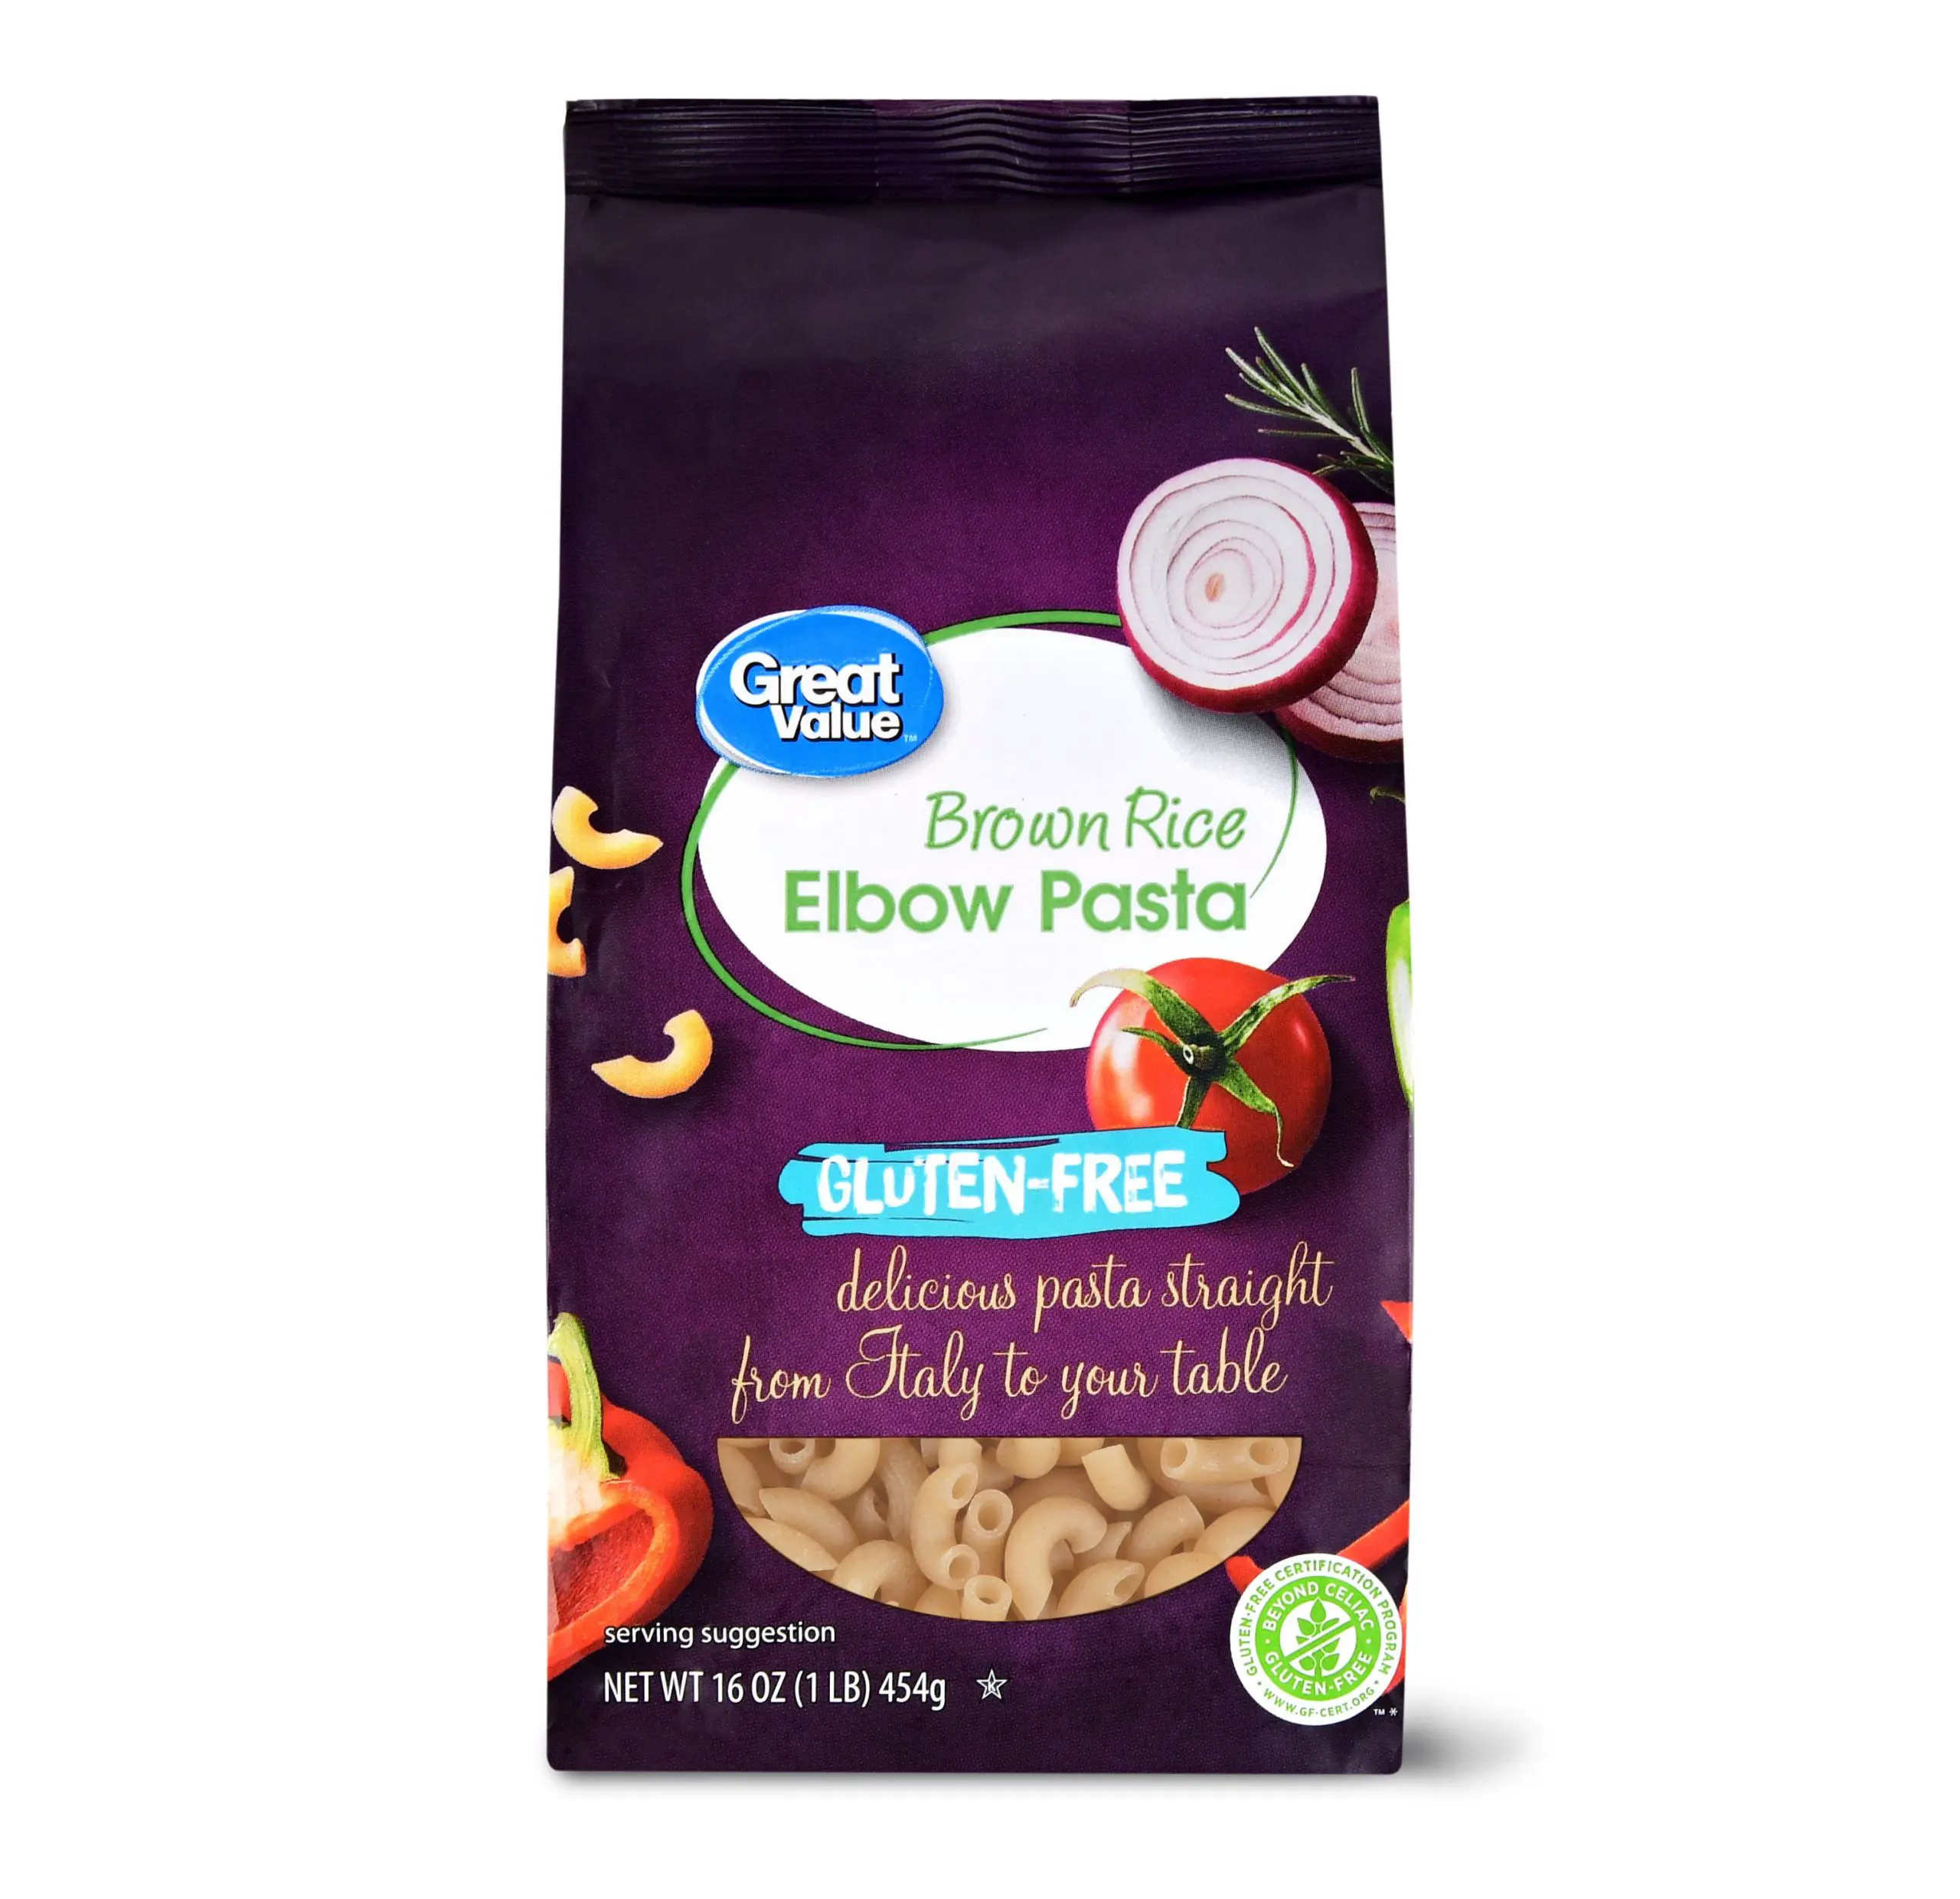 Great Value Gluten Free Brown Rice Elbow Pasta, 16 oz Bag